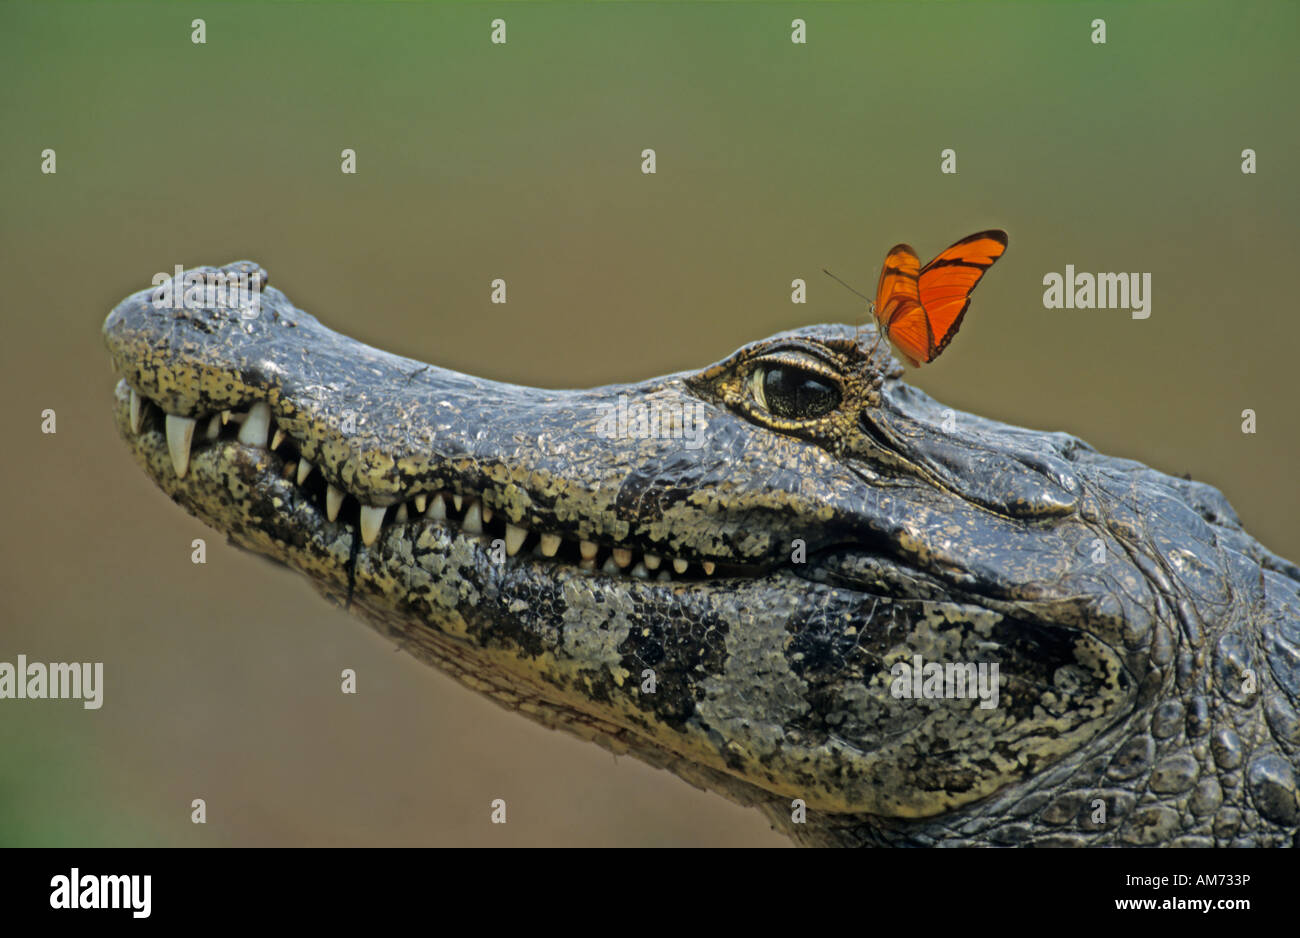 Caimano dagli occhiali (Caiman crocodilus) con butterfly, Pantanal, Brasile, Sud America Foto Stock